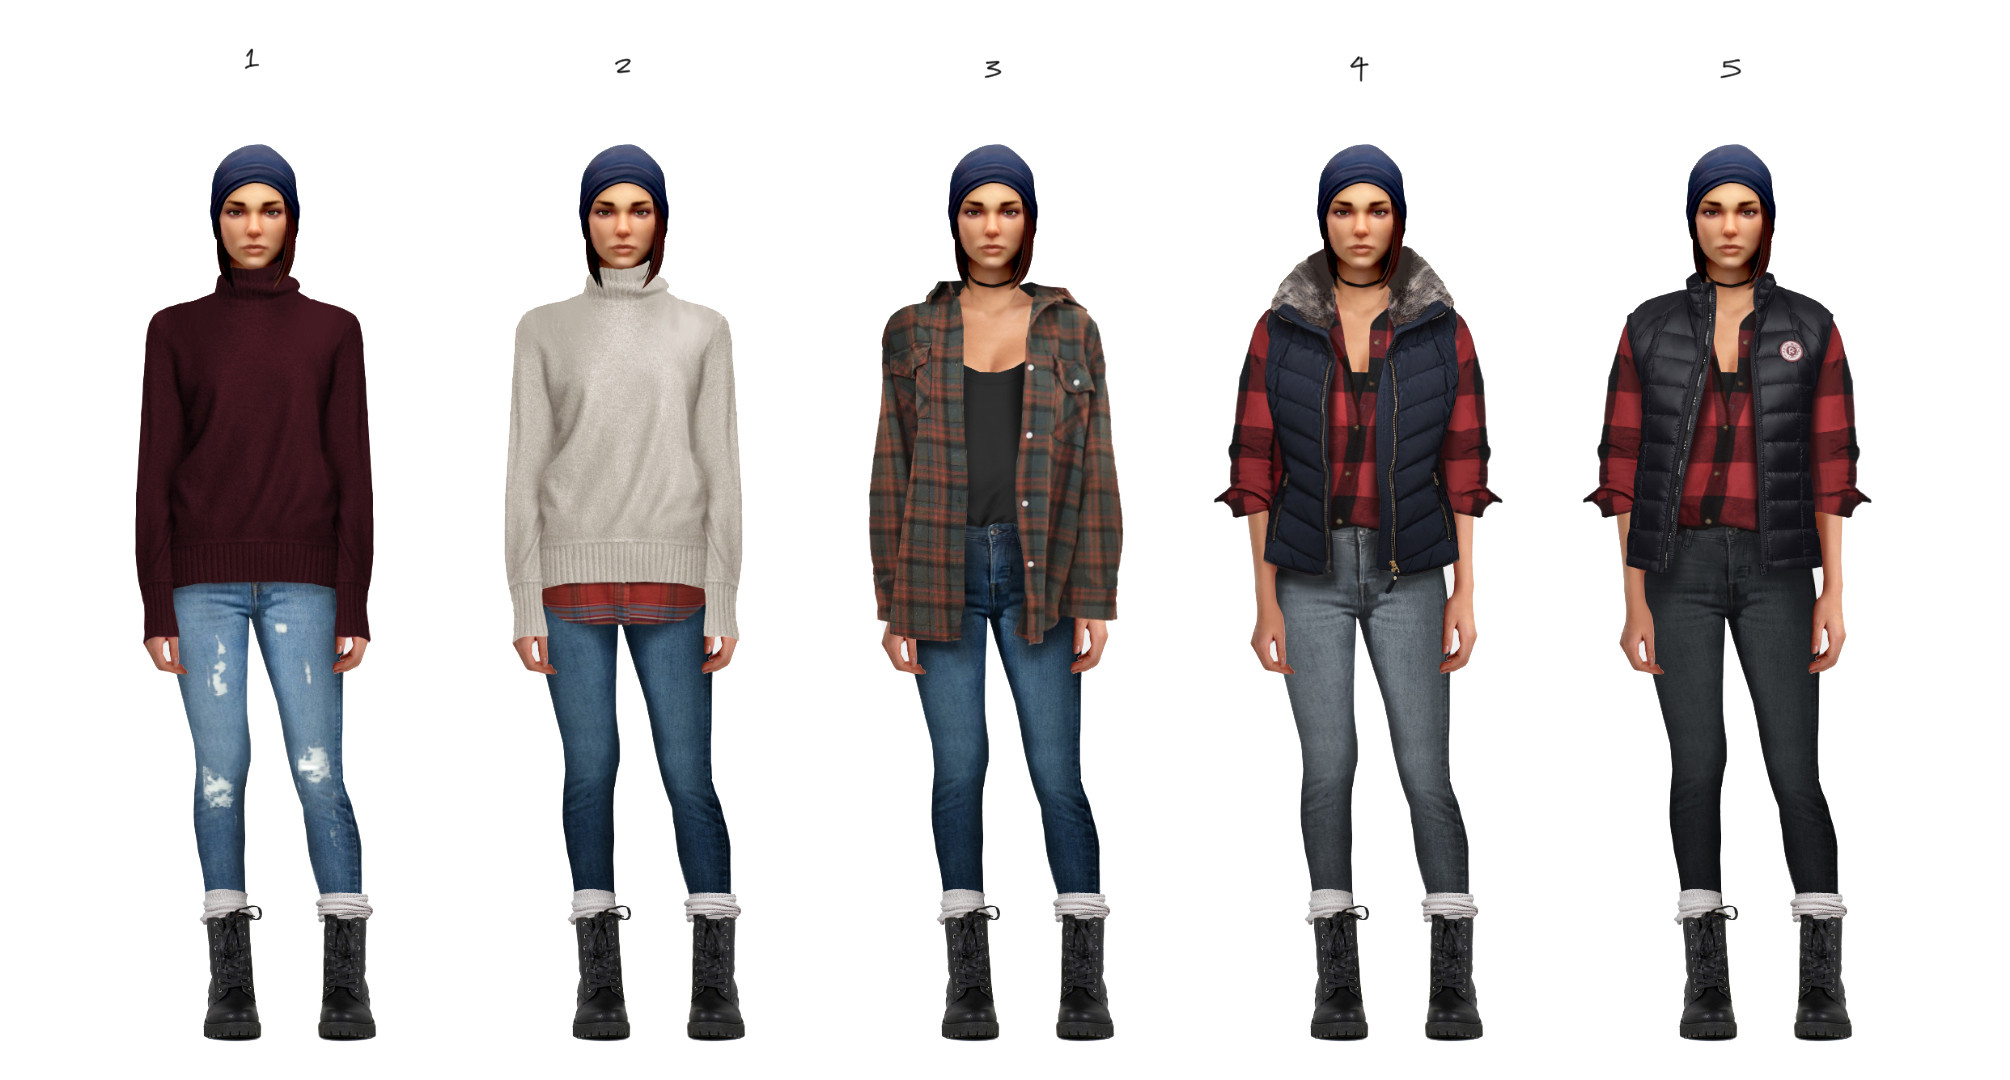 Wavelengths DLC - Winter Outfit Options 1